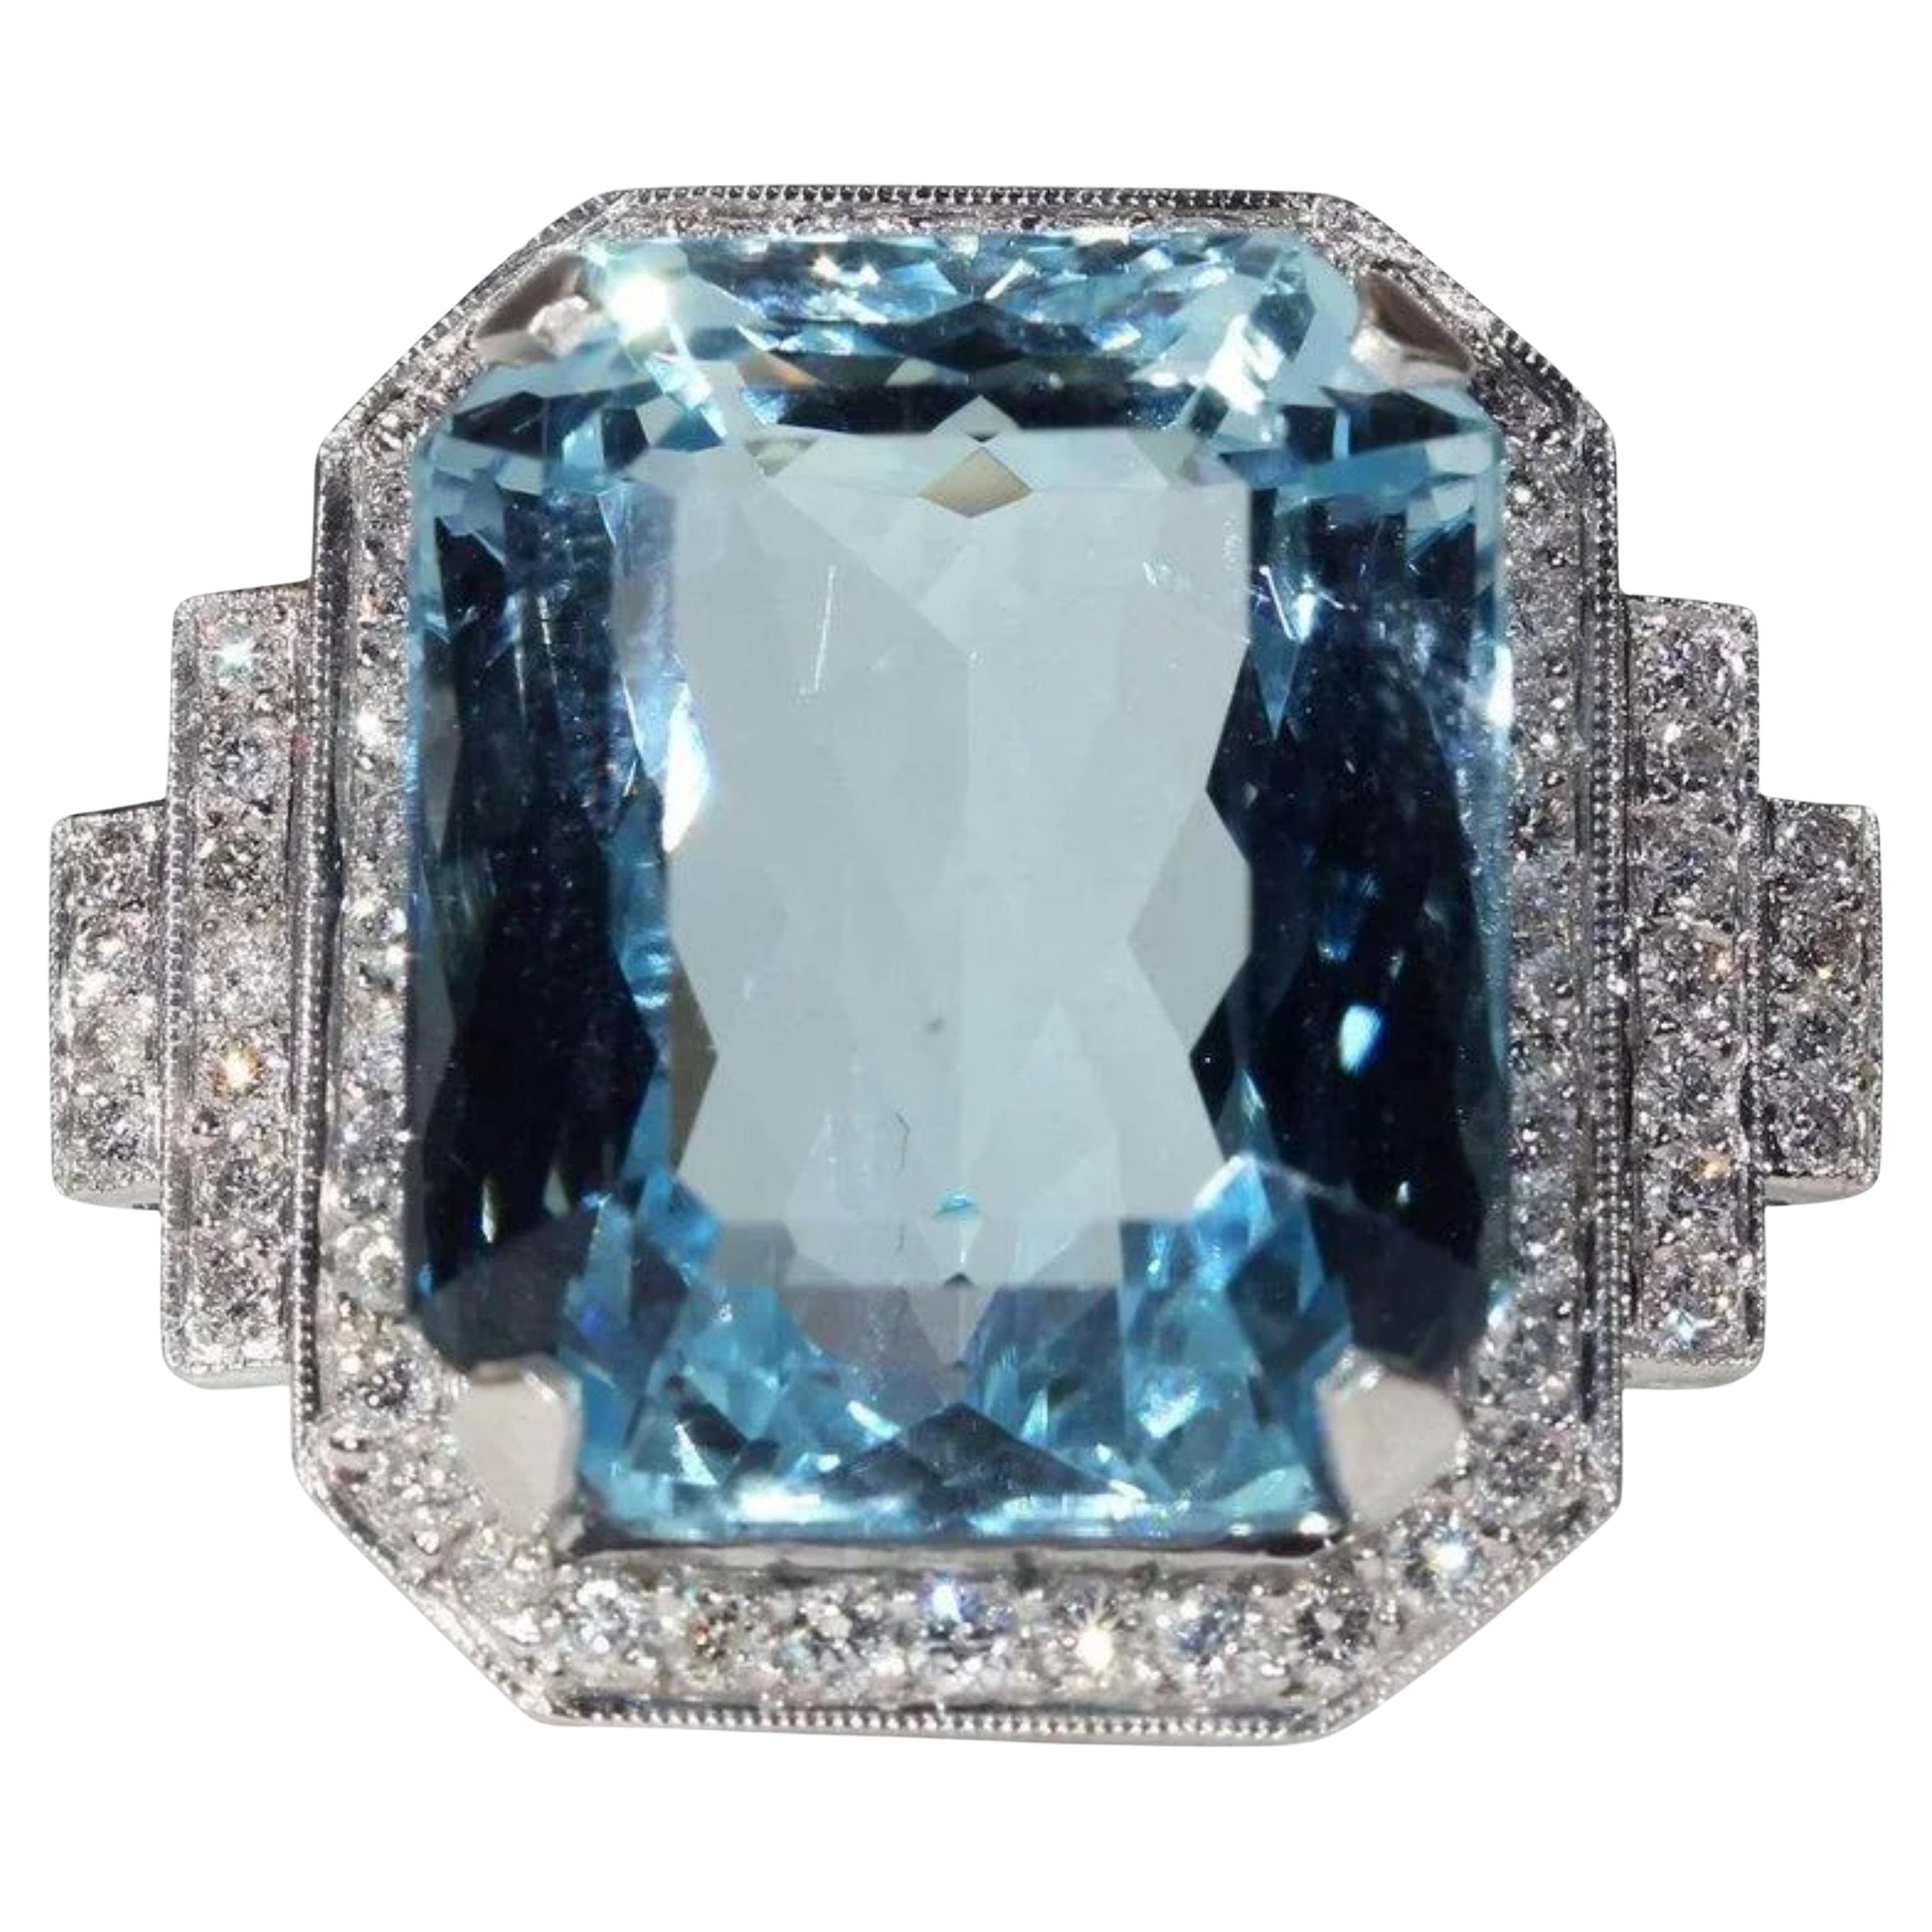 For Sale:  4 Carat Halo Blue Aquamarine Diamond Engagement Ring Cocktail Ring Signet Ring